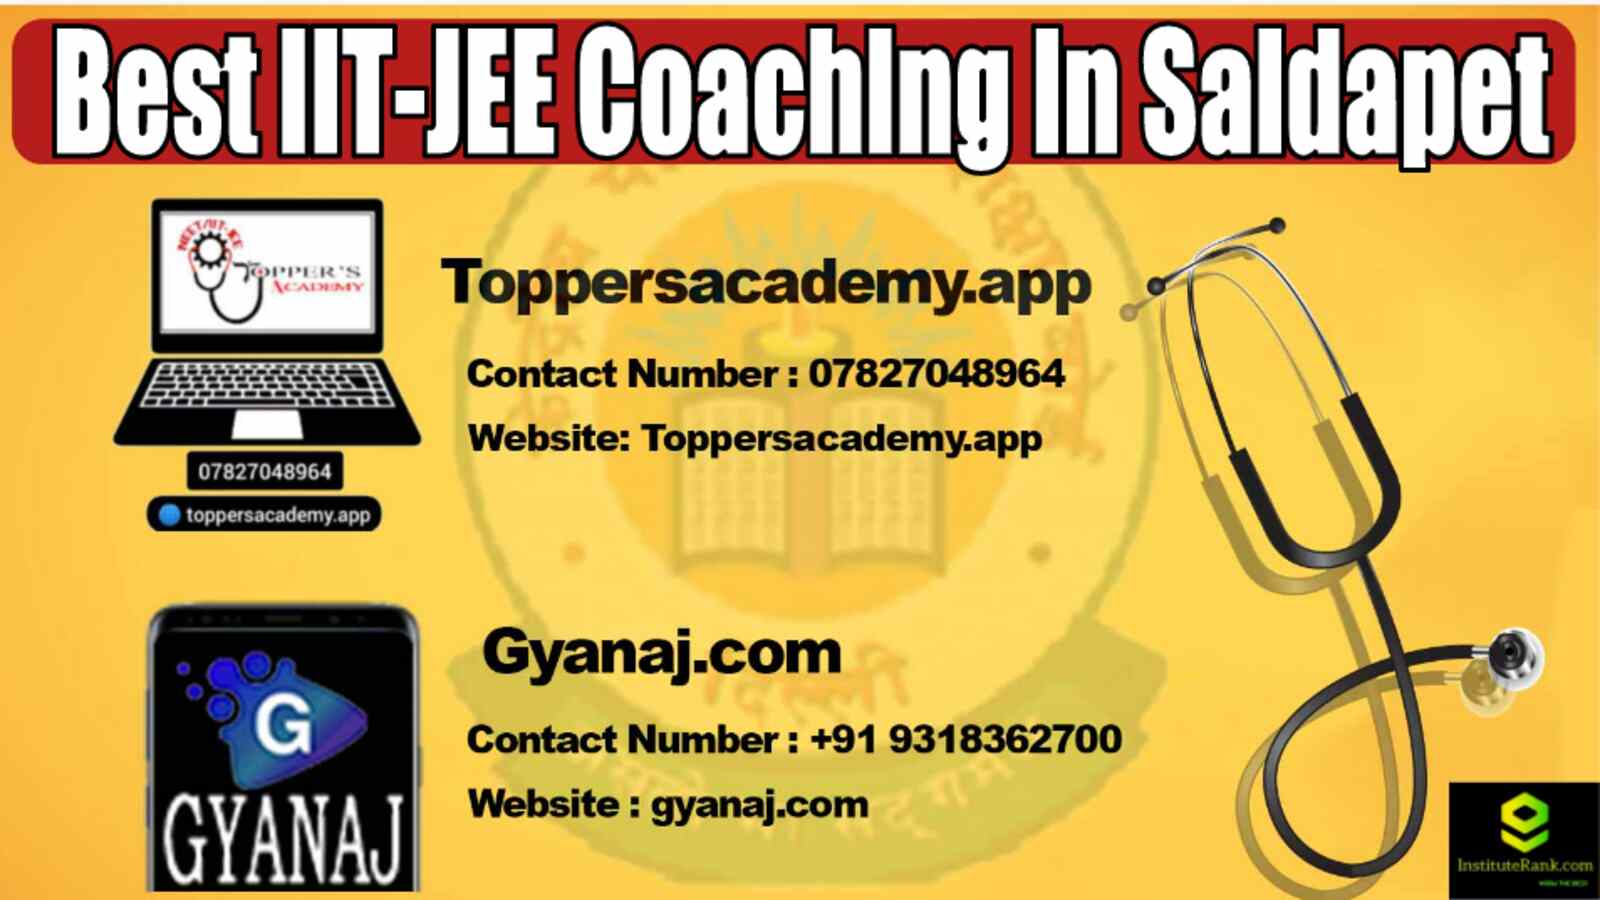 Best IIT-JEE Coaching in Saidapet 2022